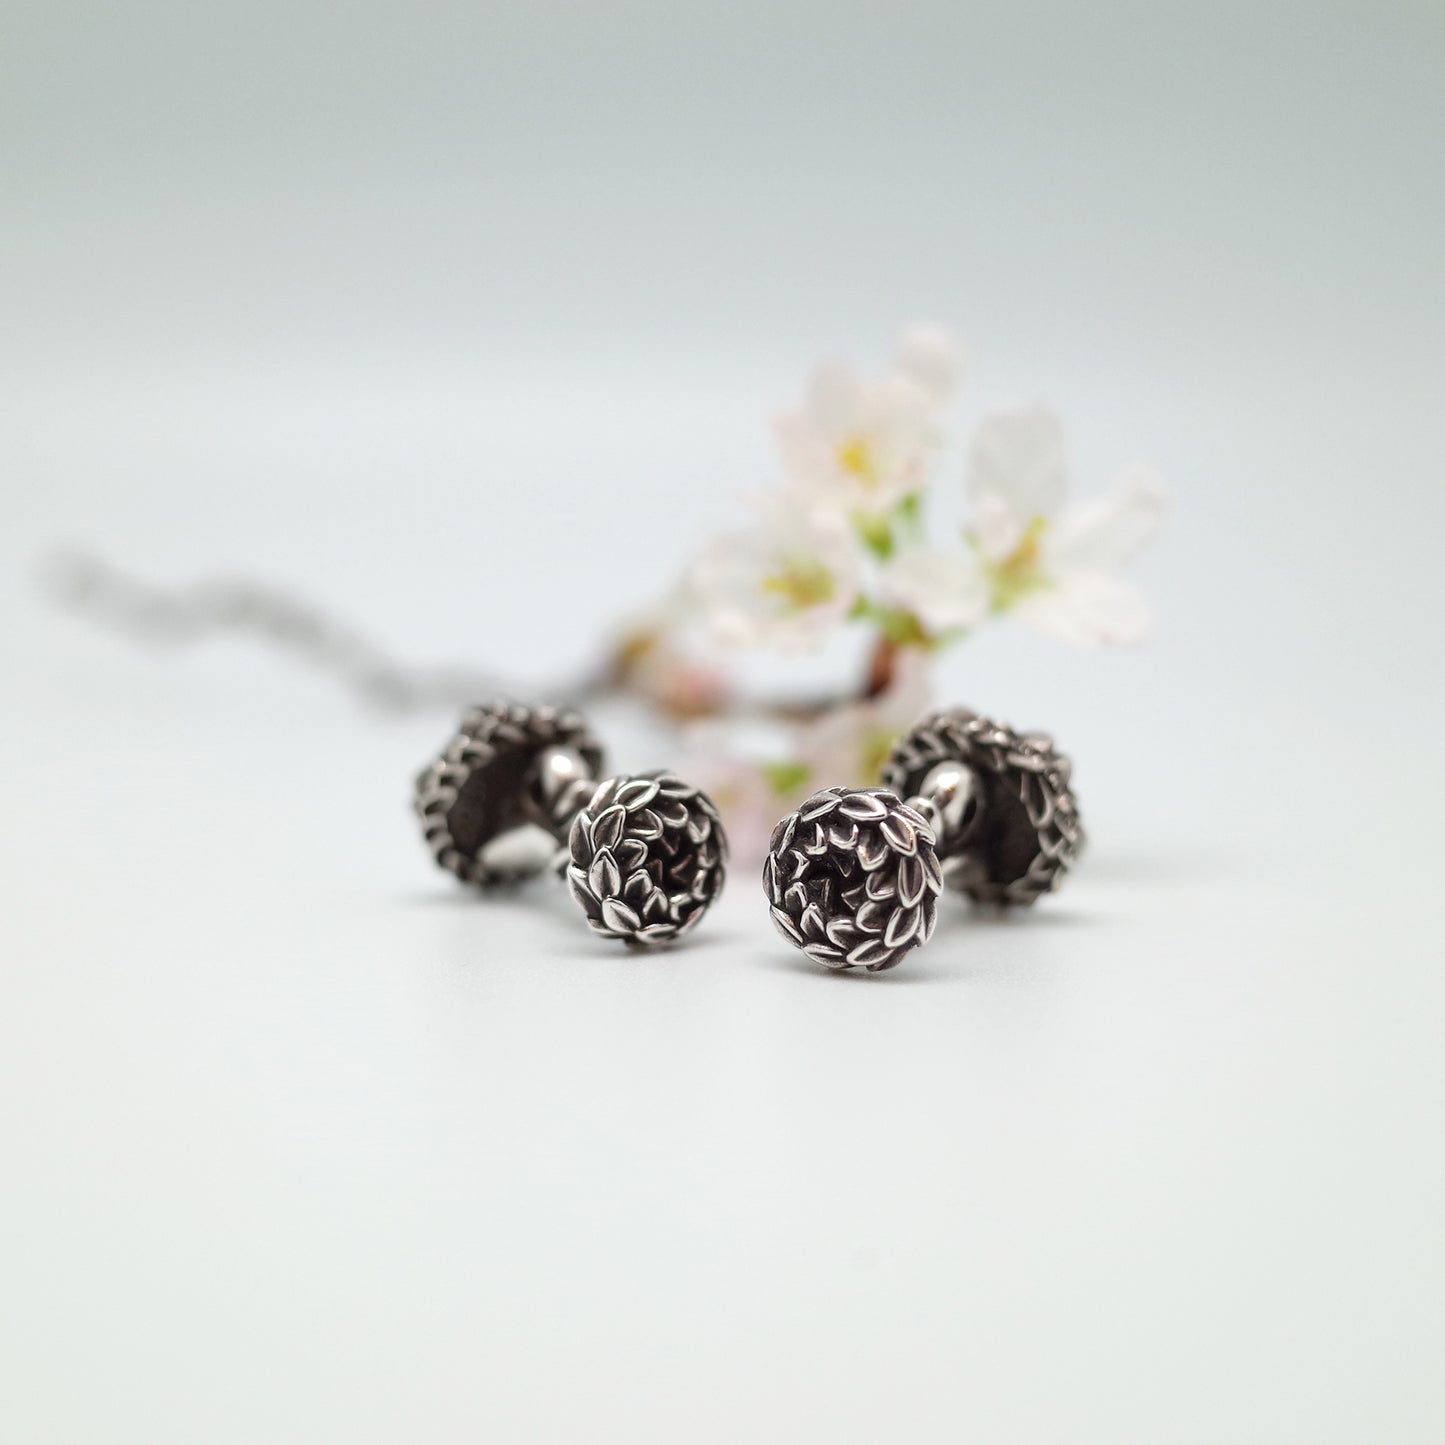 Sakura Cuff Links -Floral emblems of Japan-